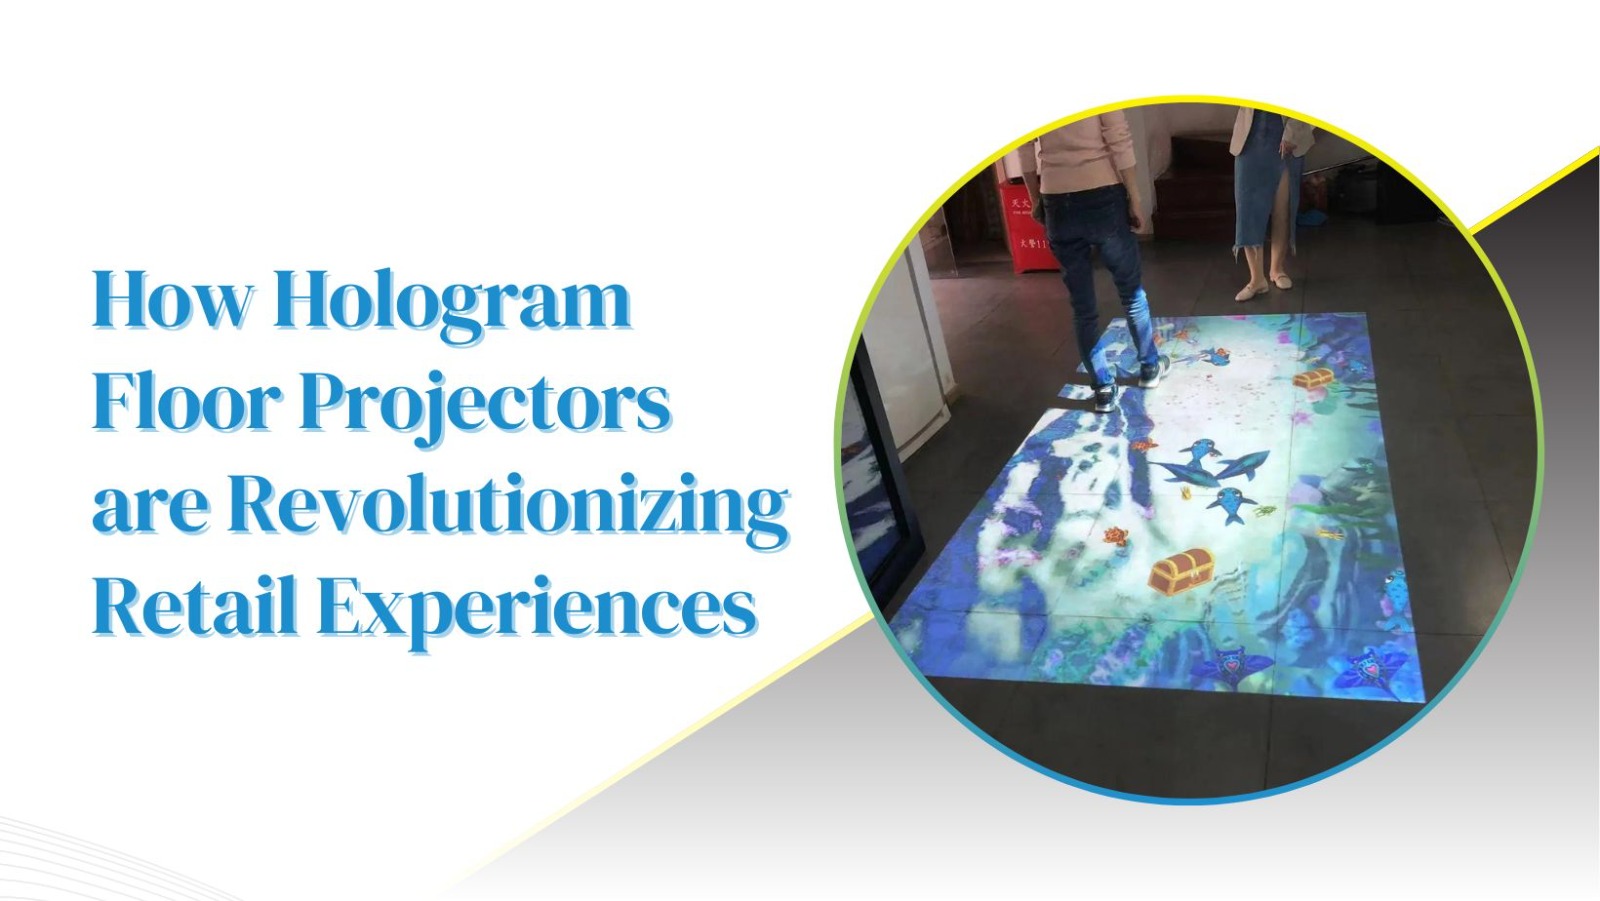 How Hologram Floor Projectors are Revolutionizing Retail Experiences?